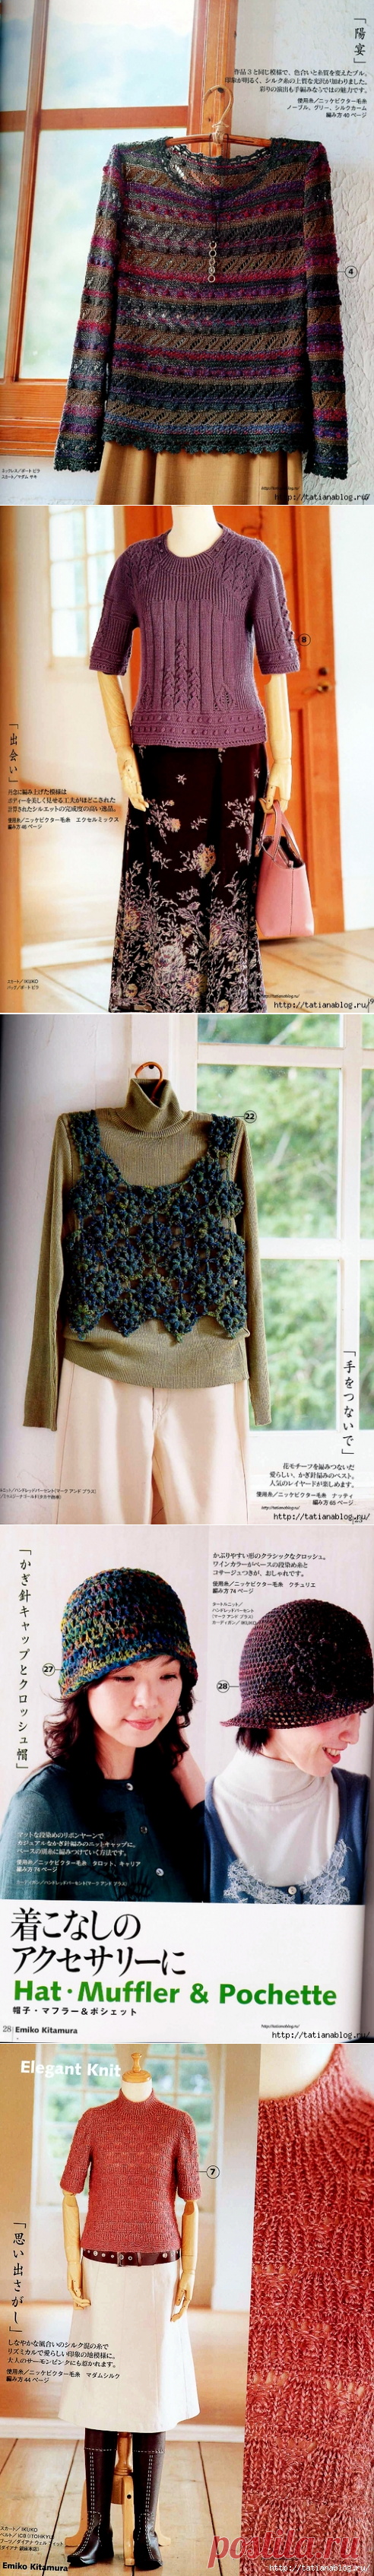 Японский журнал по вязанию Emiko Kitamura - Designer Knit Elegant Knit, Stylish Knit, Layered Vest, Hat, Muffler & Pochette